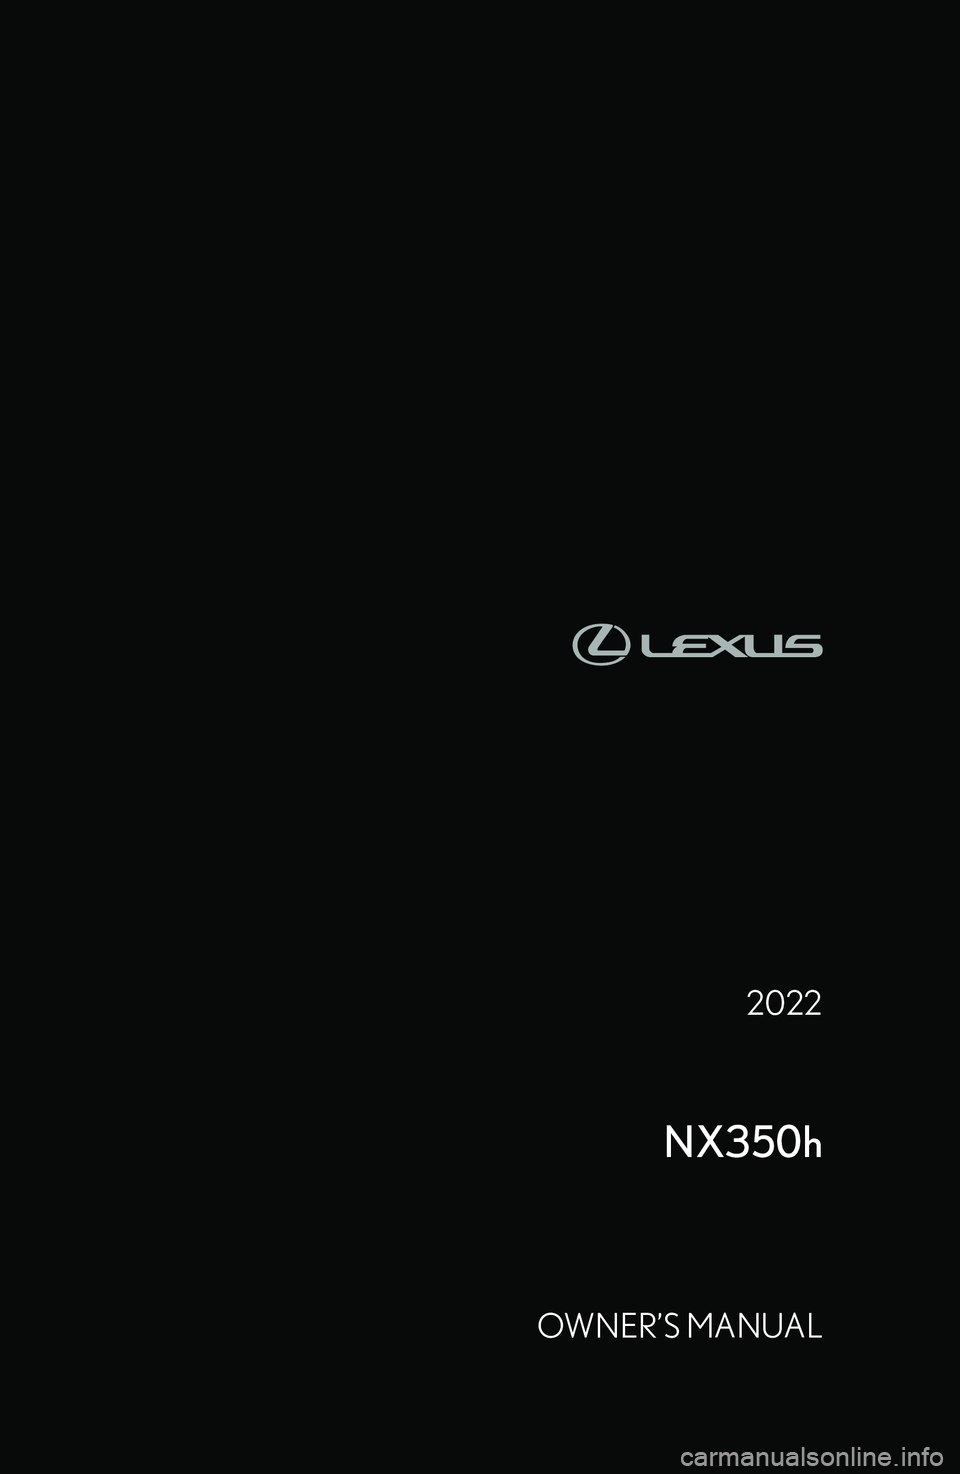 LEXUS NX300h 2022  Owners Manual �2�0�2�2
�N�X�3�5�0�h
�O�W�N�E�R�
�S� �M�A�N�U�A�L  